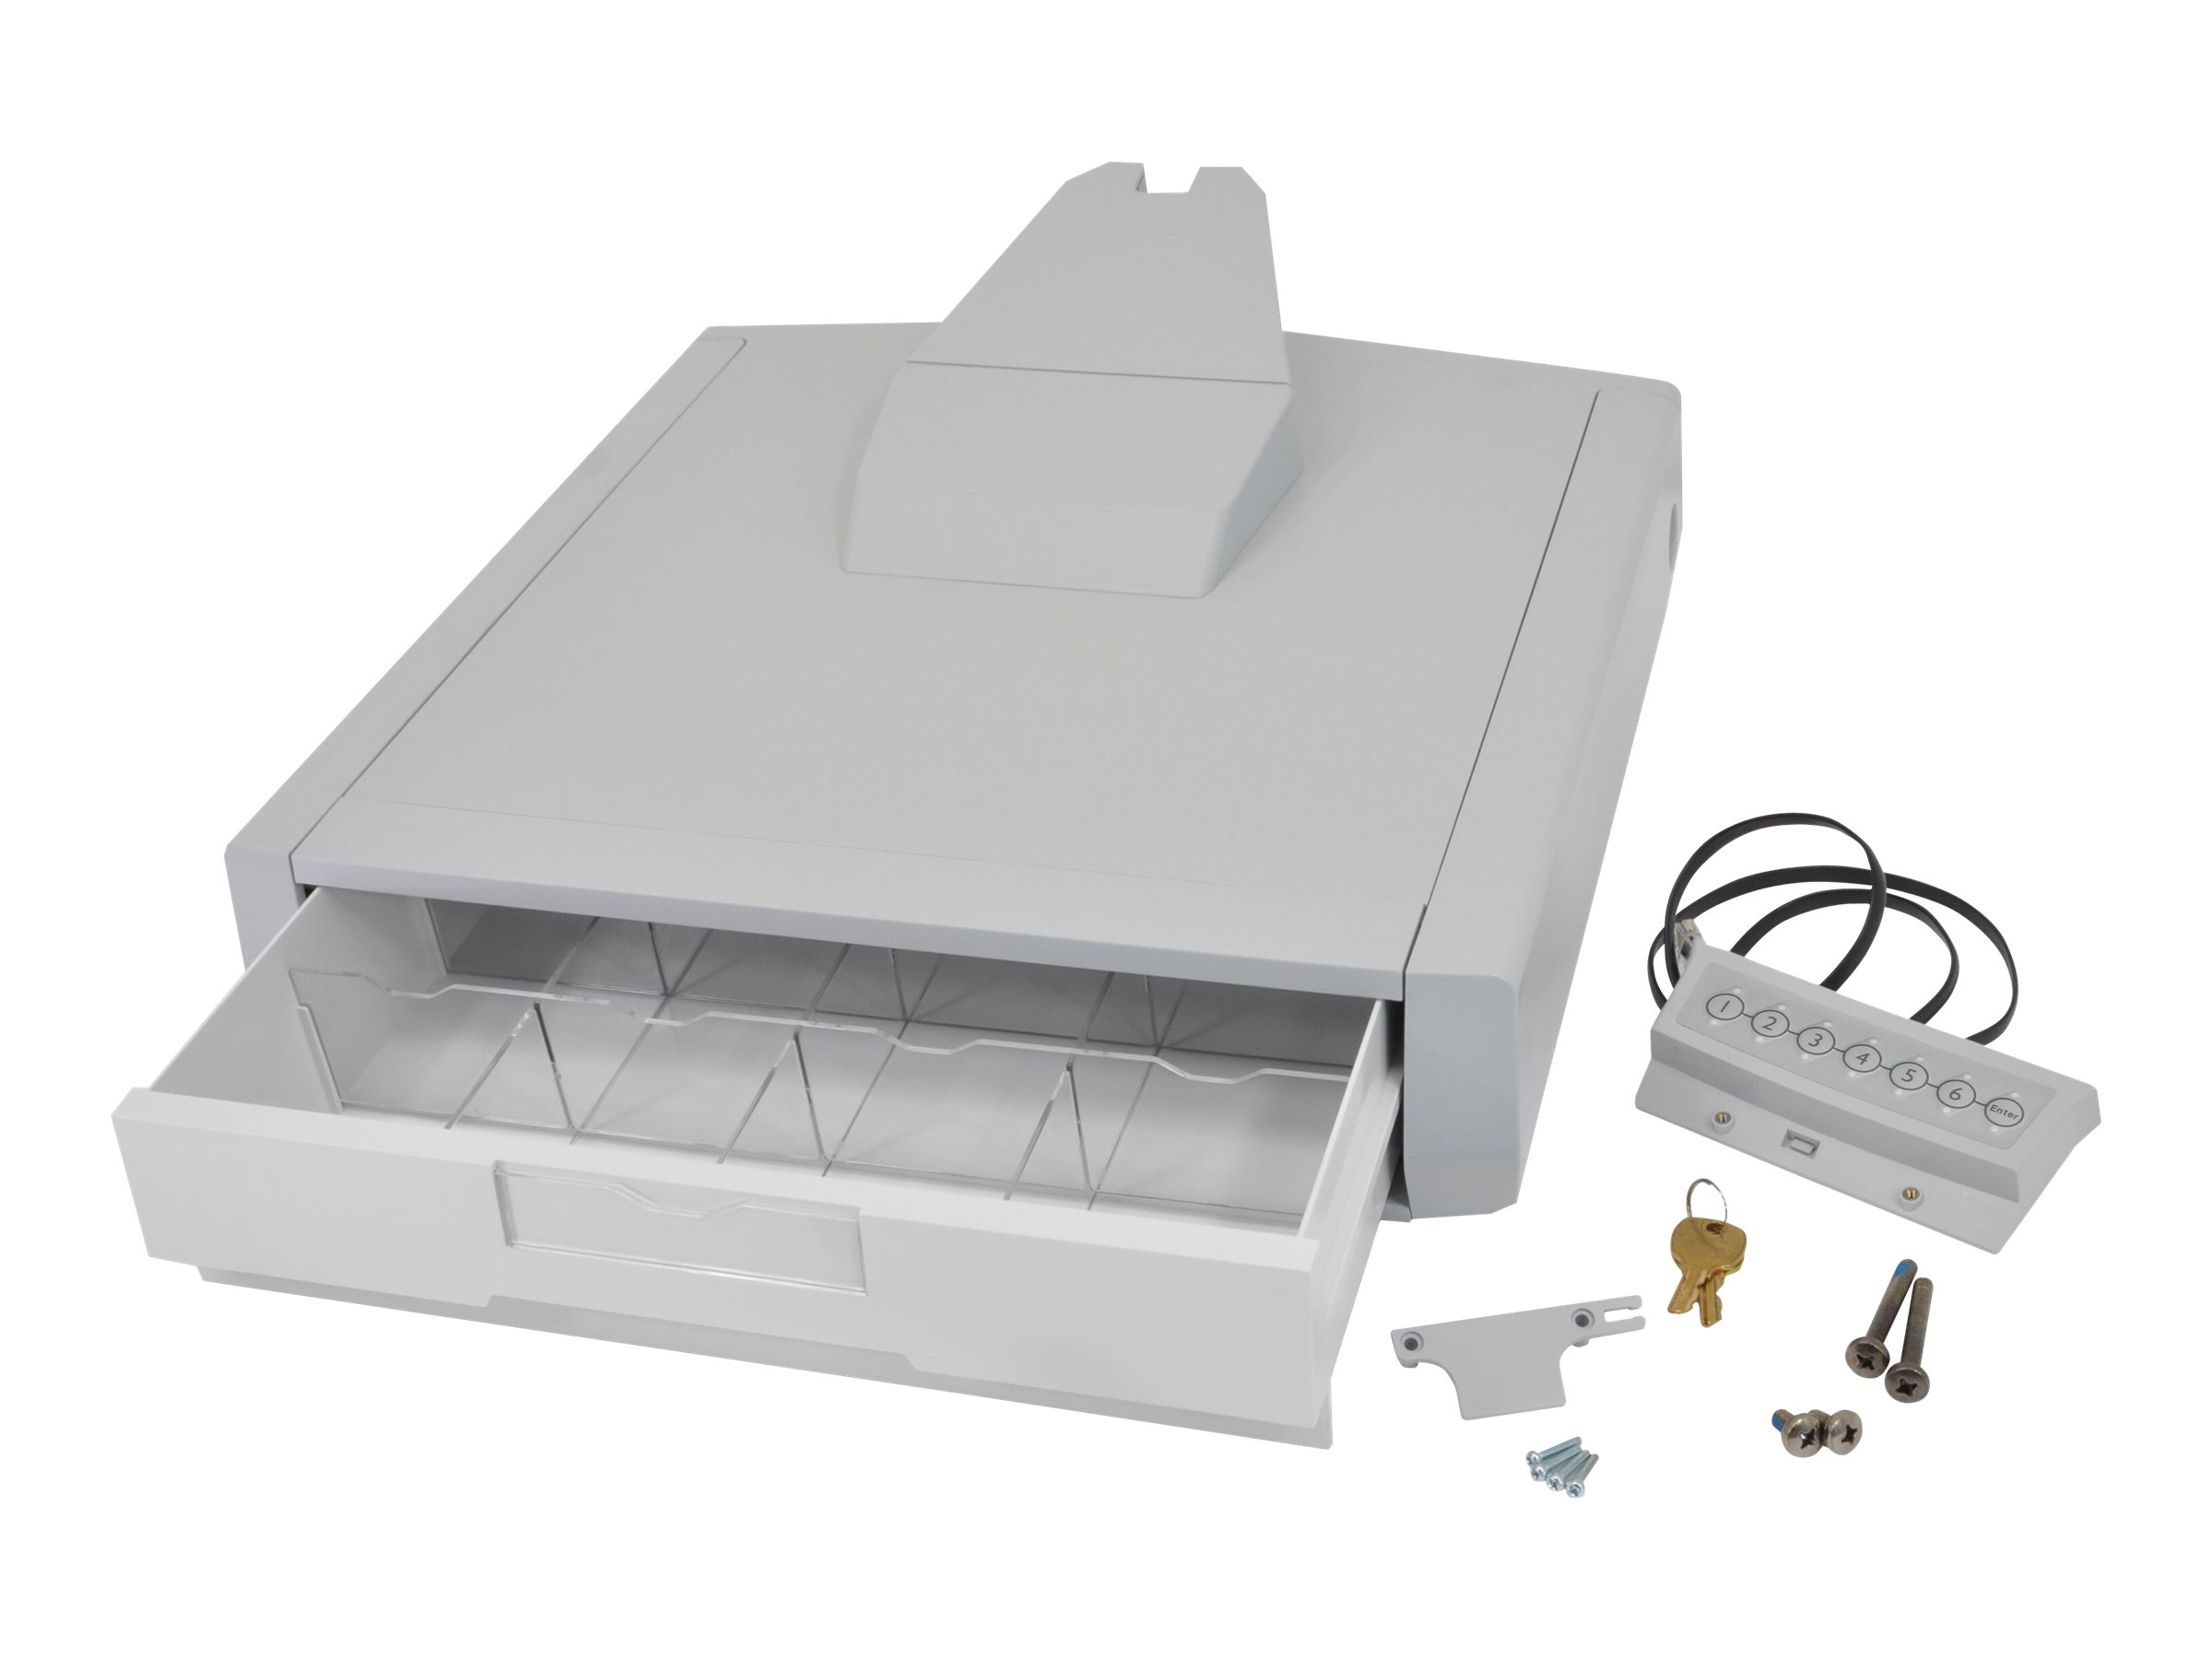 Ergotron SV43 Primary Single Drawer for Laptop Cart - Montagekomponente (Auszugsmodul) - Grau, weiss